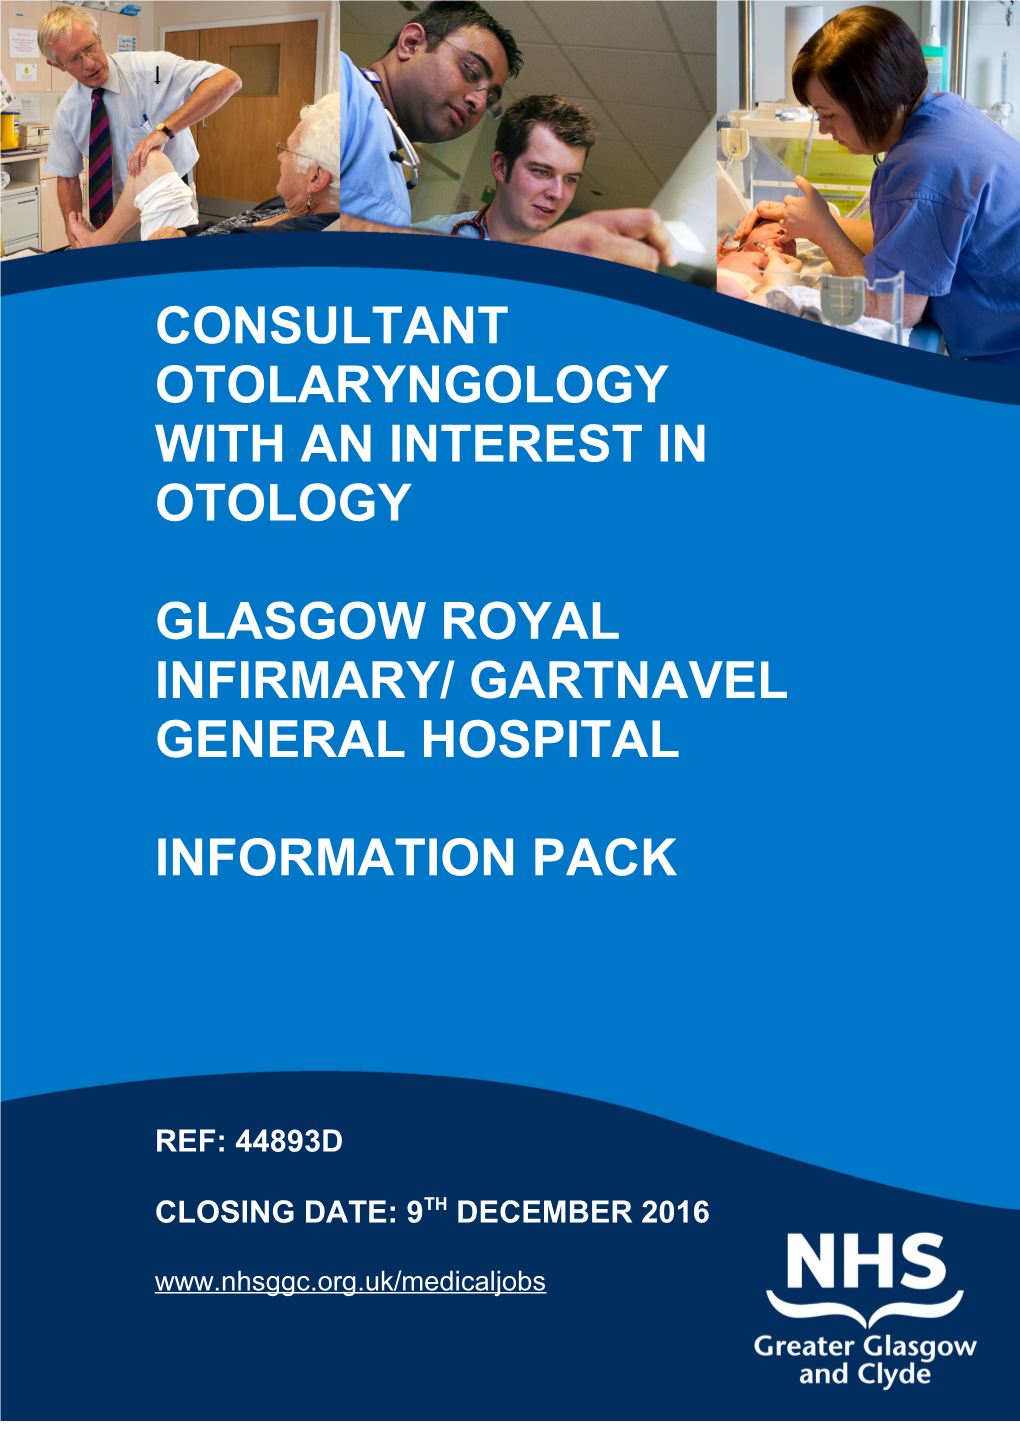 Glasgow Royal Infirmary/ Gartnavelgeneralhospital